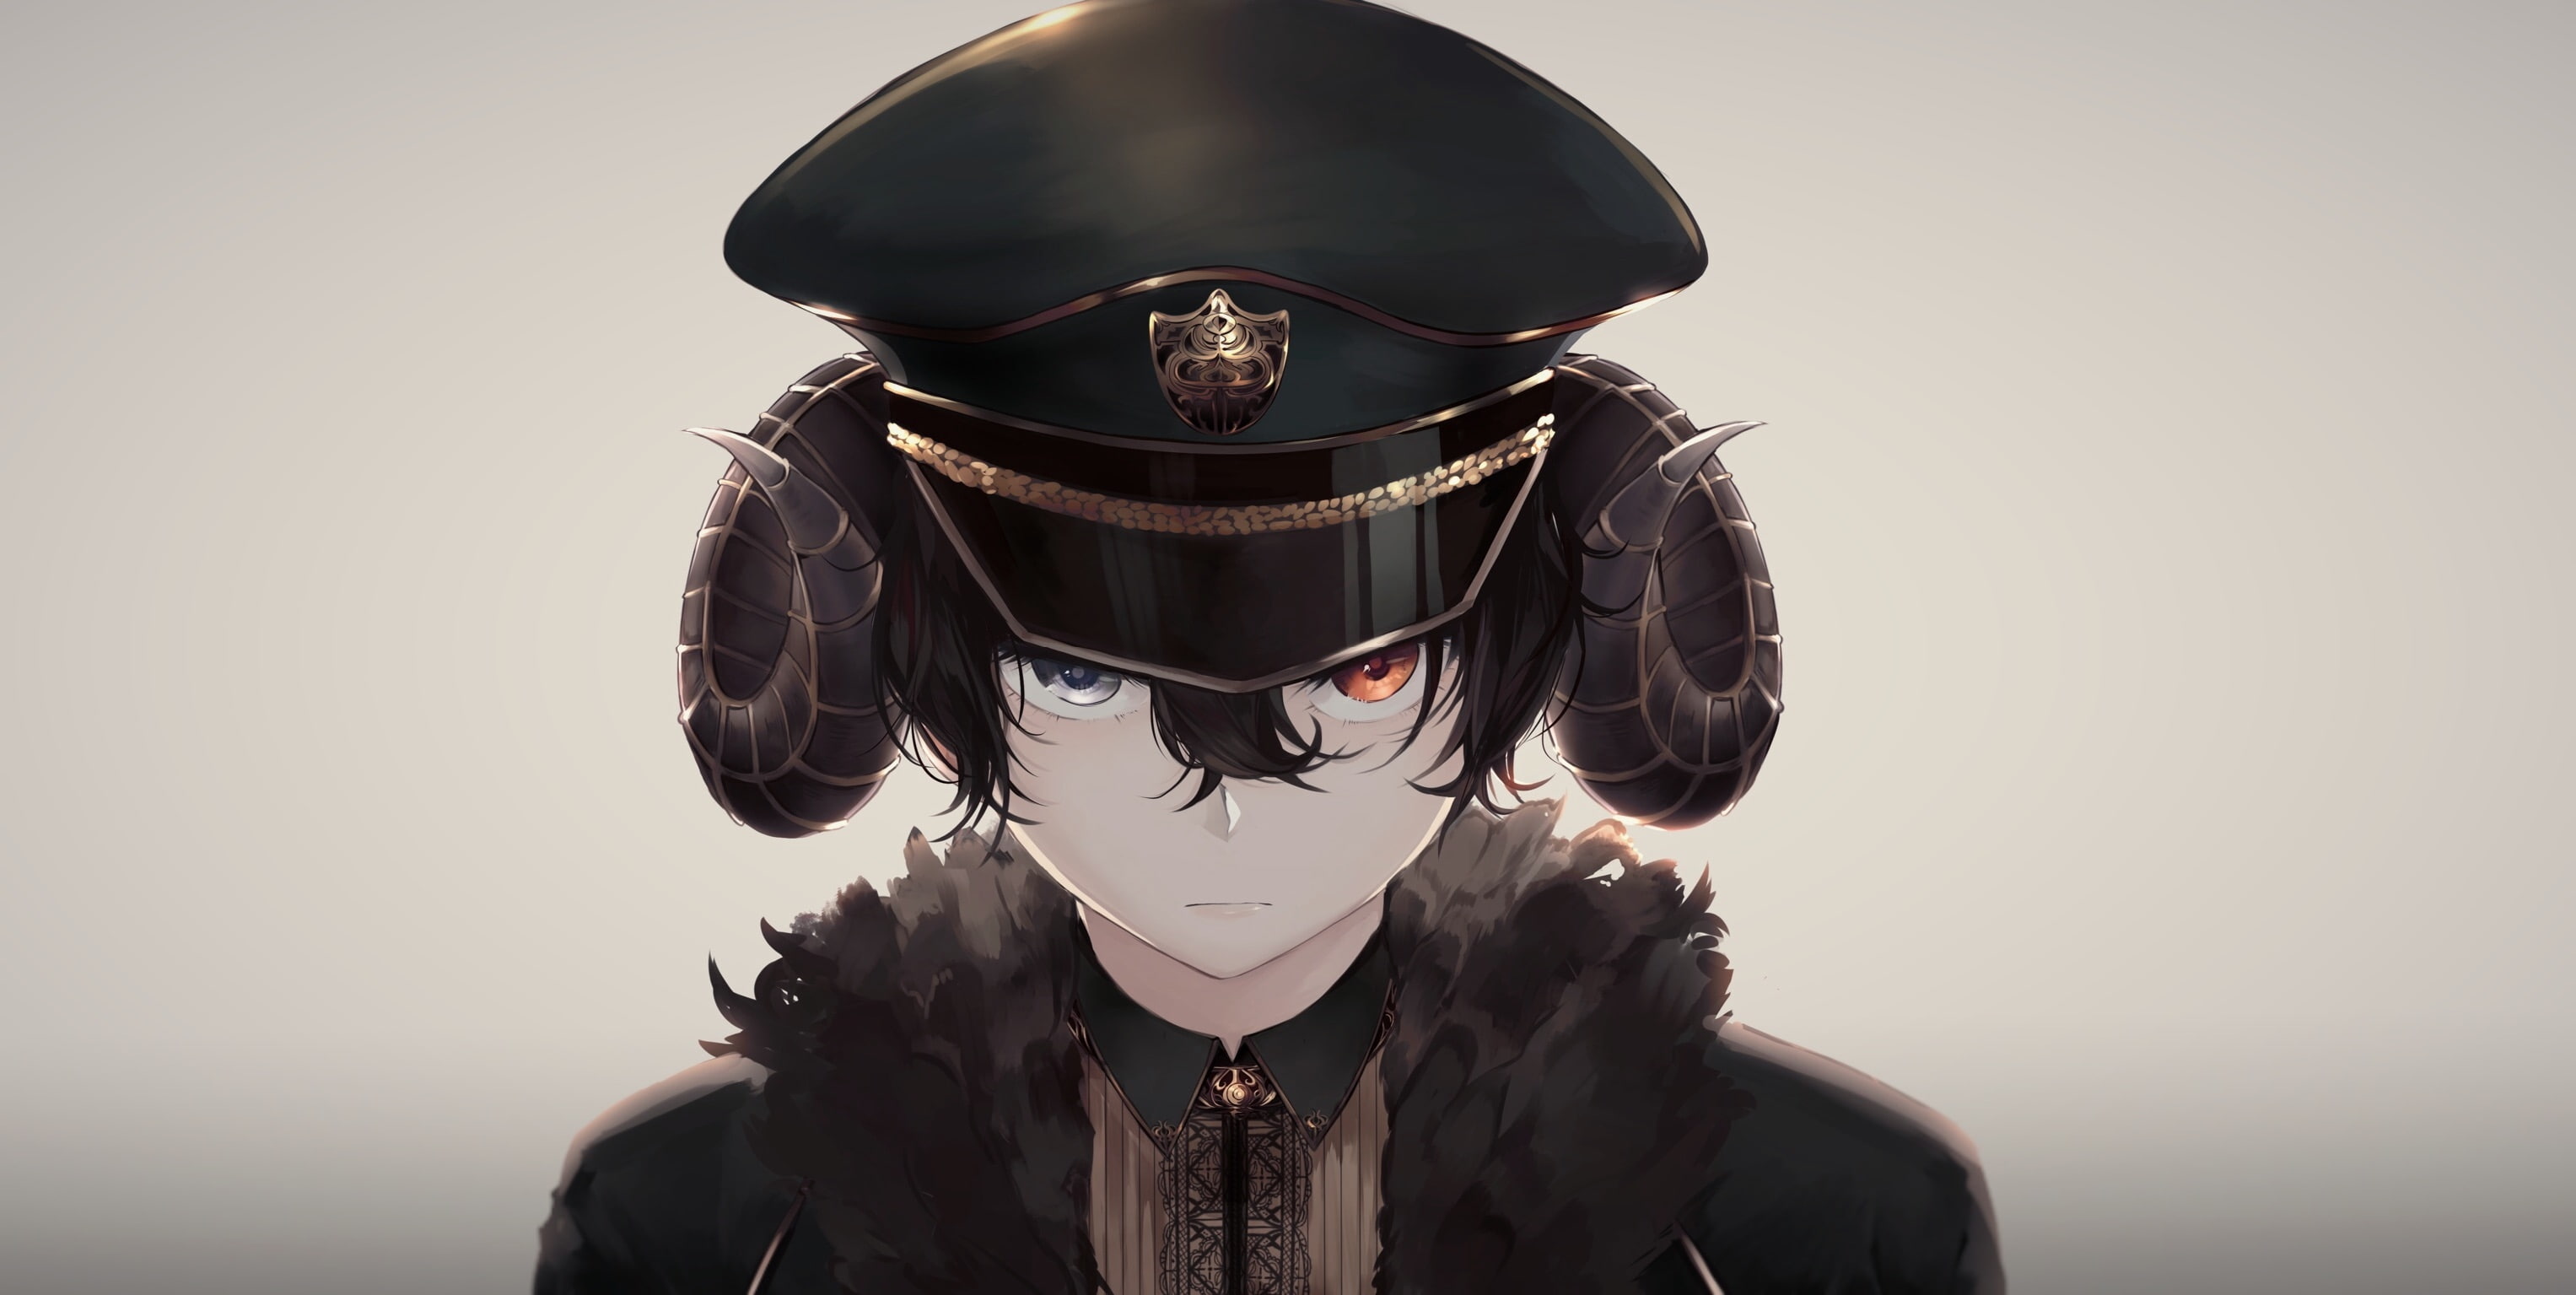 Anime Black Hair Boy With Hat